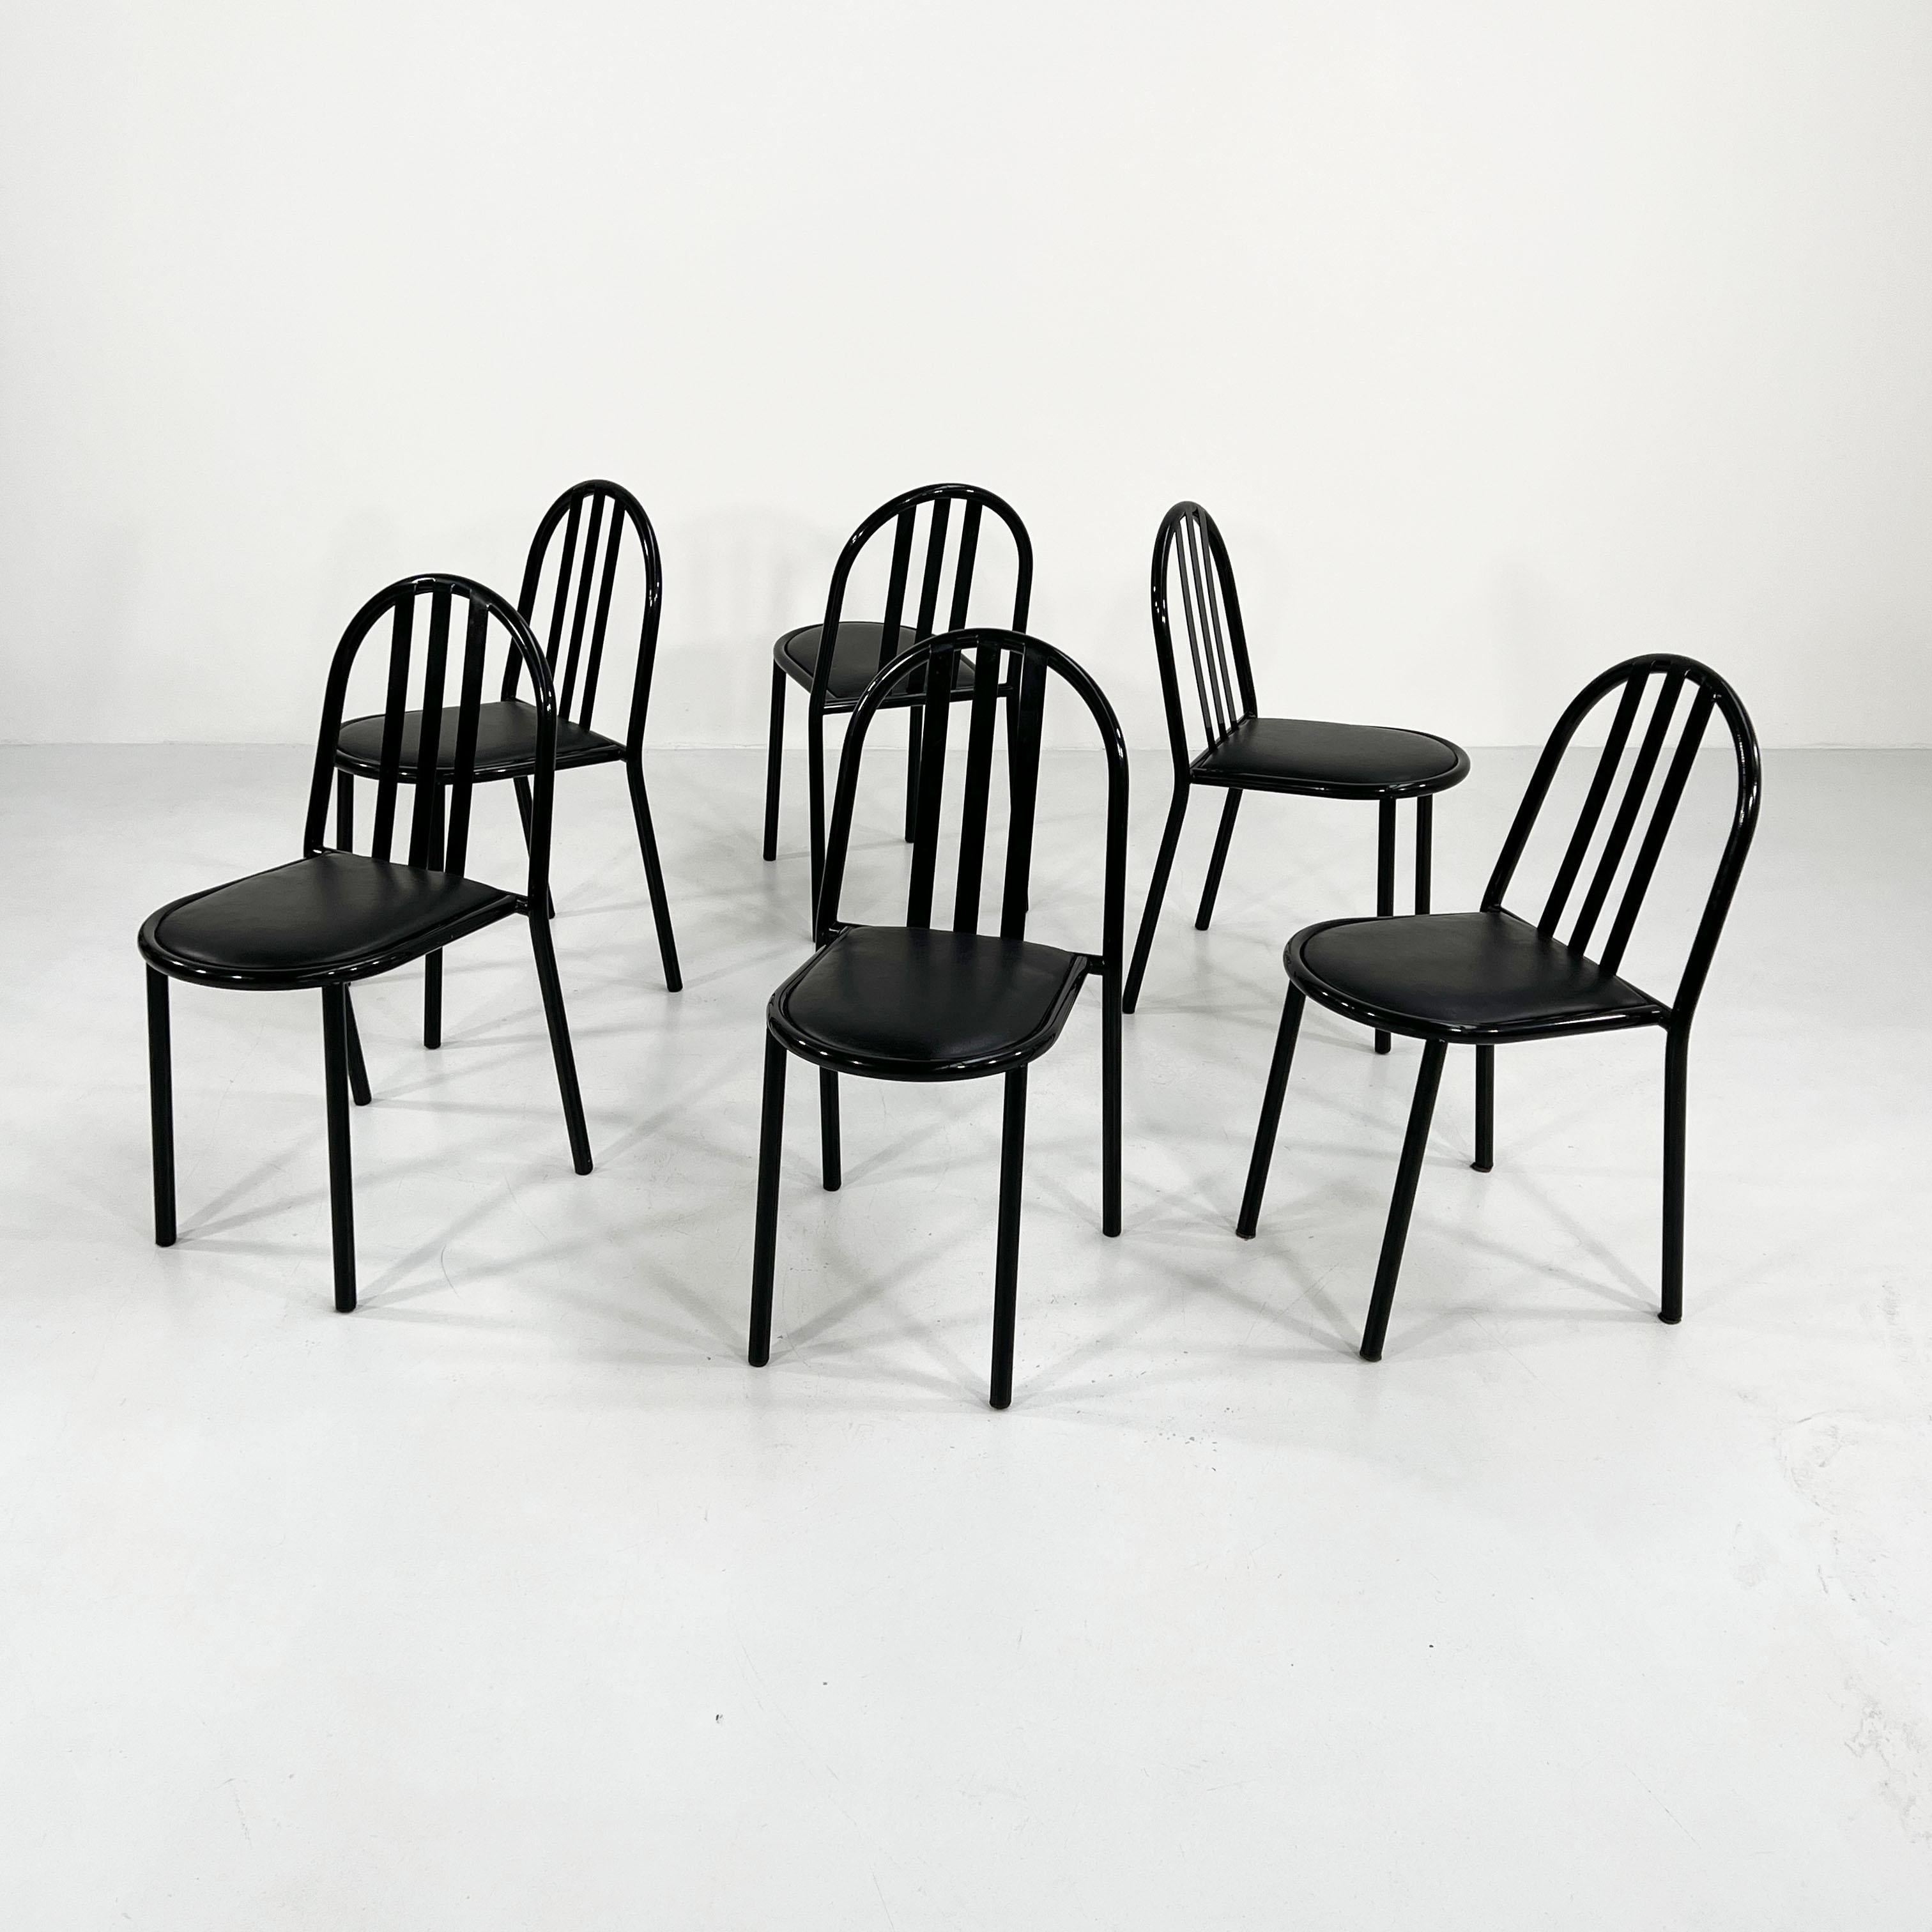 Designer - Robert Mallet-Stevens
Producer - Pallucco Italia
Model - No.222 Chairs 
Design Period - Eighties
Measurements - Width 40 cm x Depth 40 cm x Height 82 cm x Seat Height 46 cm
Materials - Metal, Simili 
Color - Black
Light wear